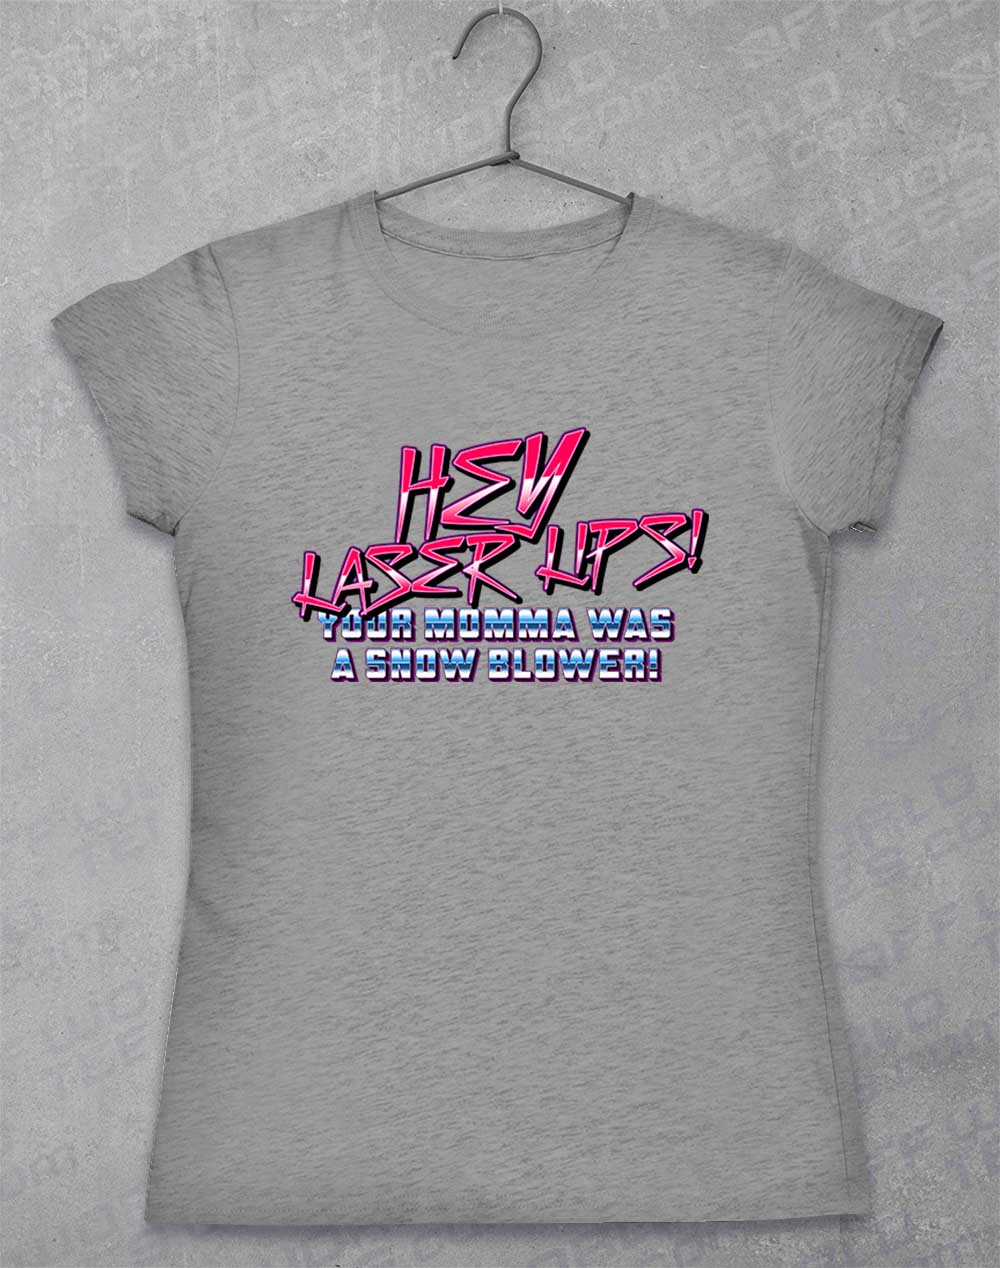 Sport Grey - Hey Laser Lips Women's T-Shirt